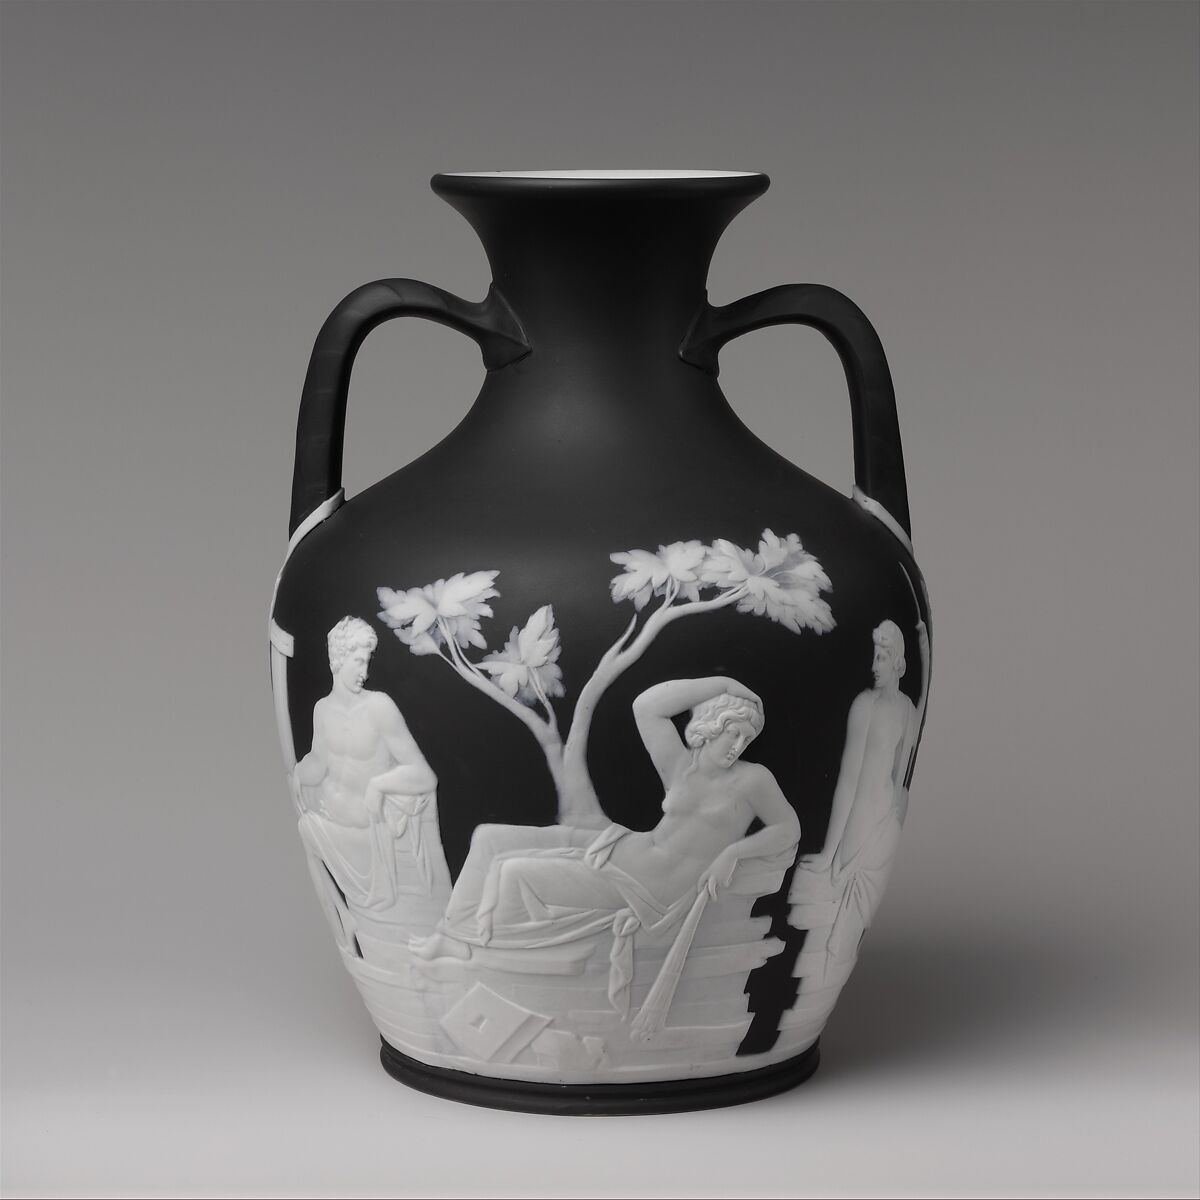 Portland vase, Josiah Wedgwood and Sons (British, Etruria, Staffordshire, 1759–present), Black basalt ware with white relief decoration, British, Staffordshire 